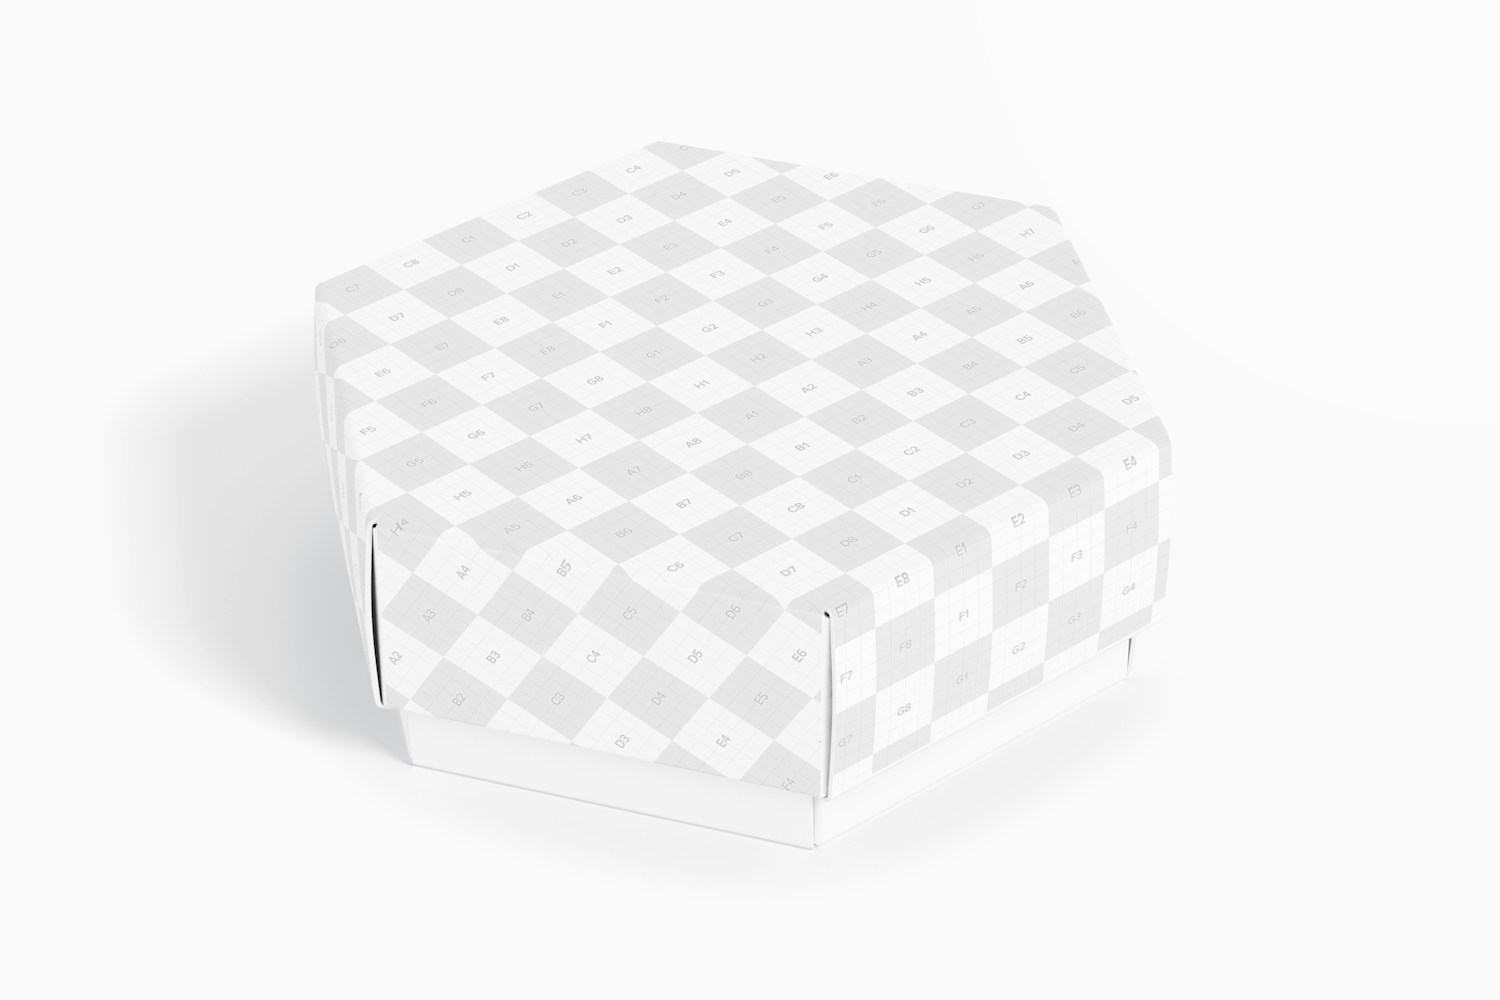 Hexagonal Box Mockup, Perspective